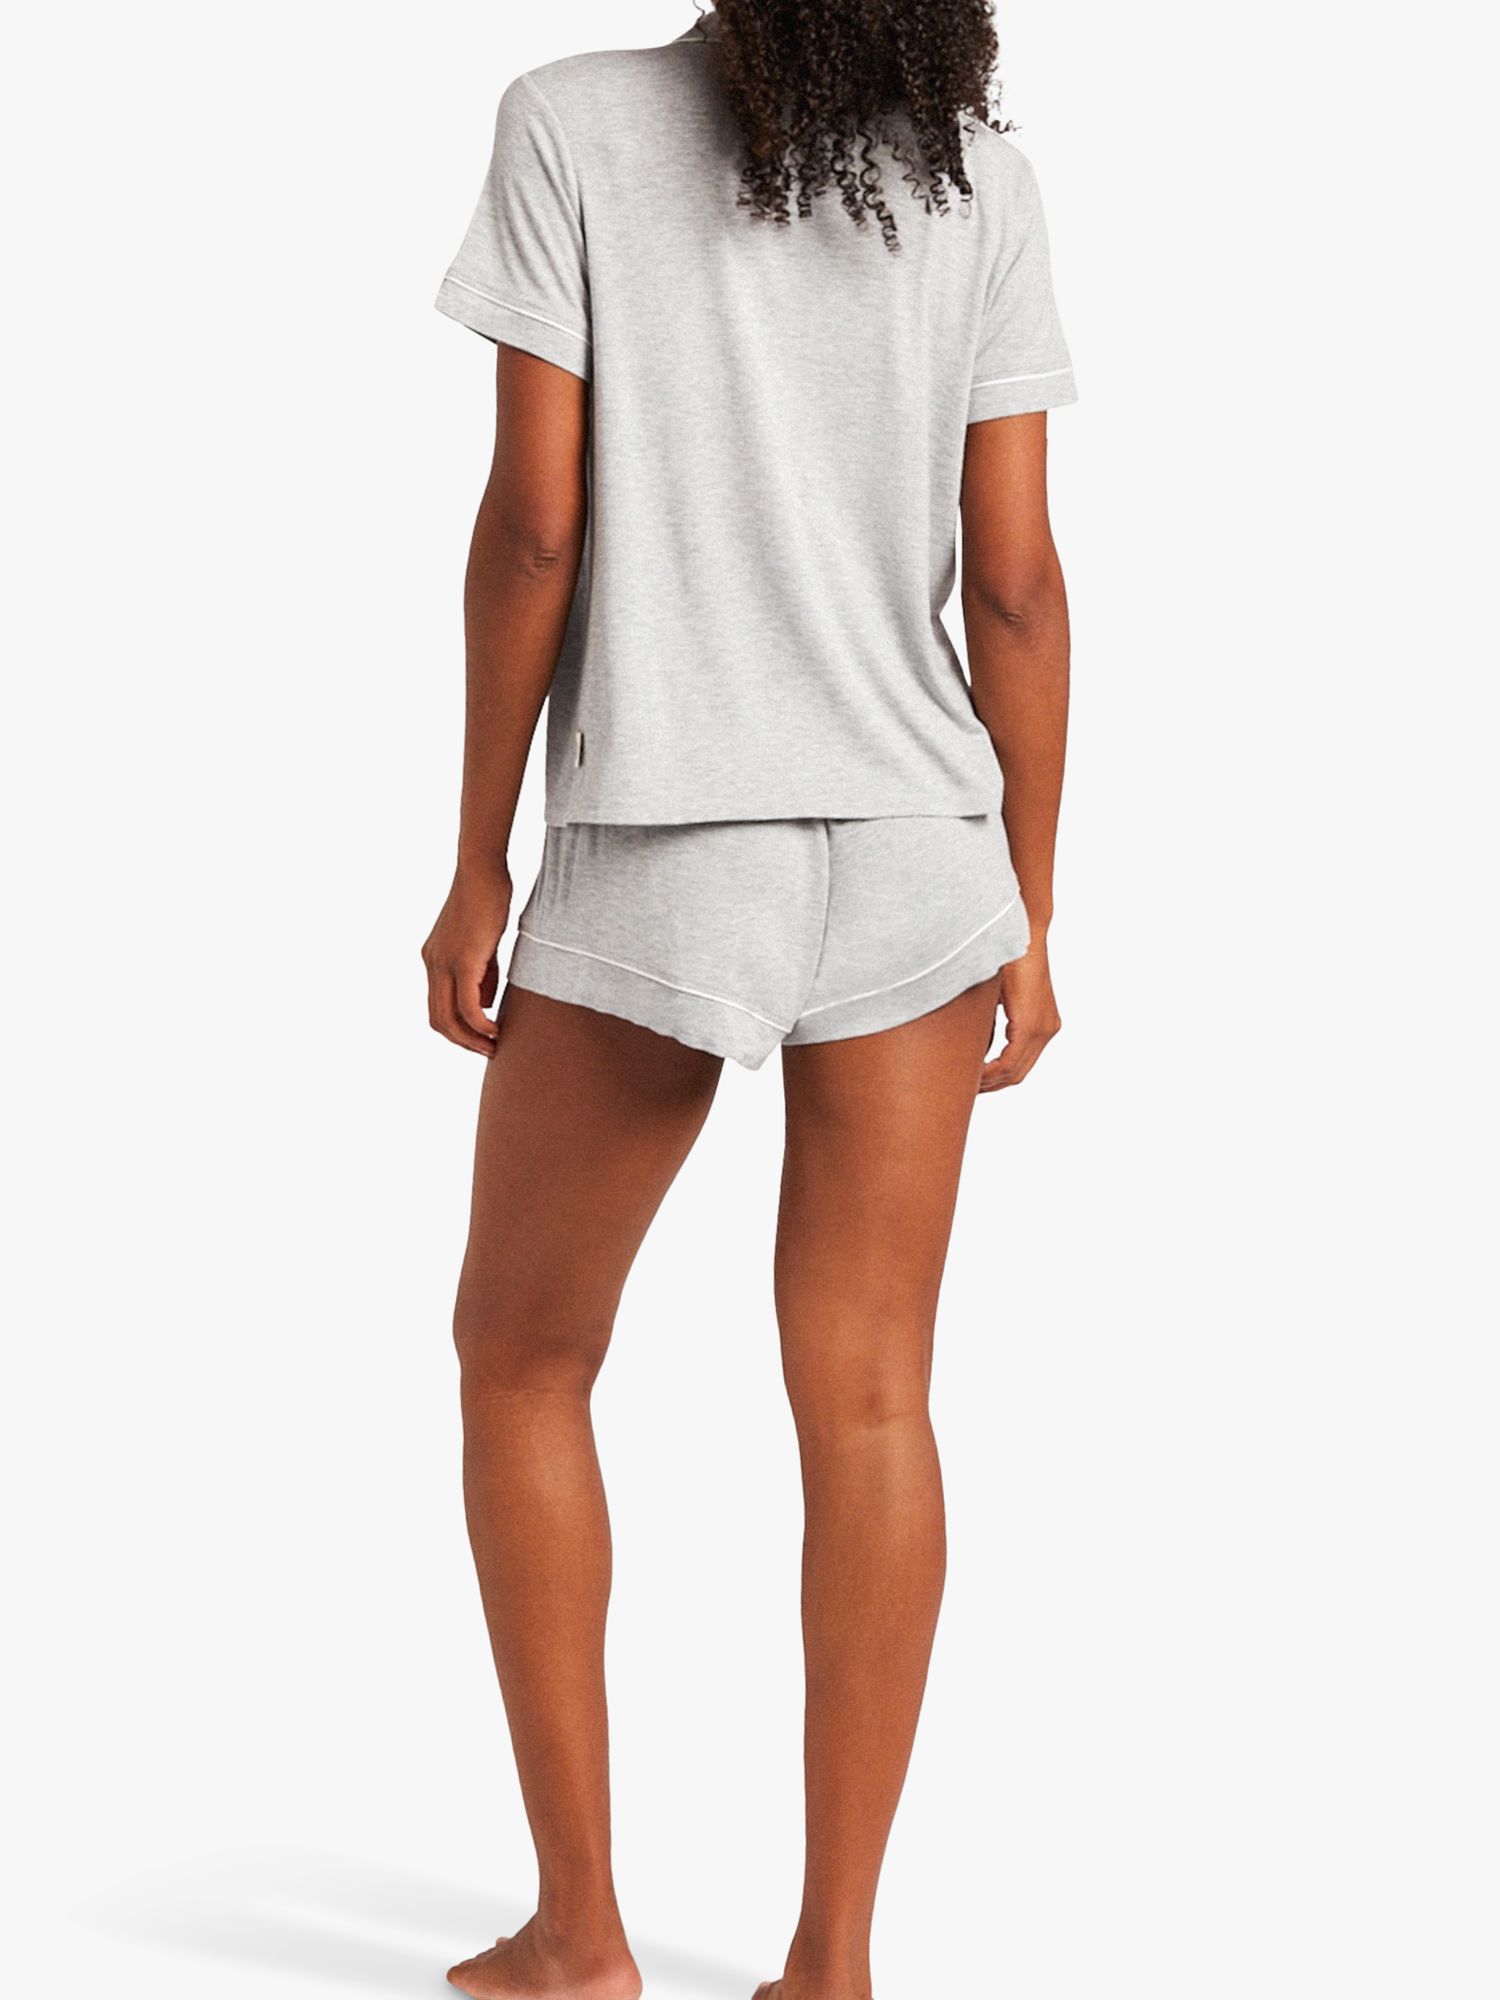 Buy Chelsea Peers Modal Piped Shorts Pyjama Set Online at johnlewis.com